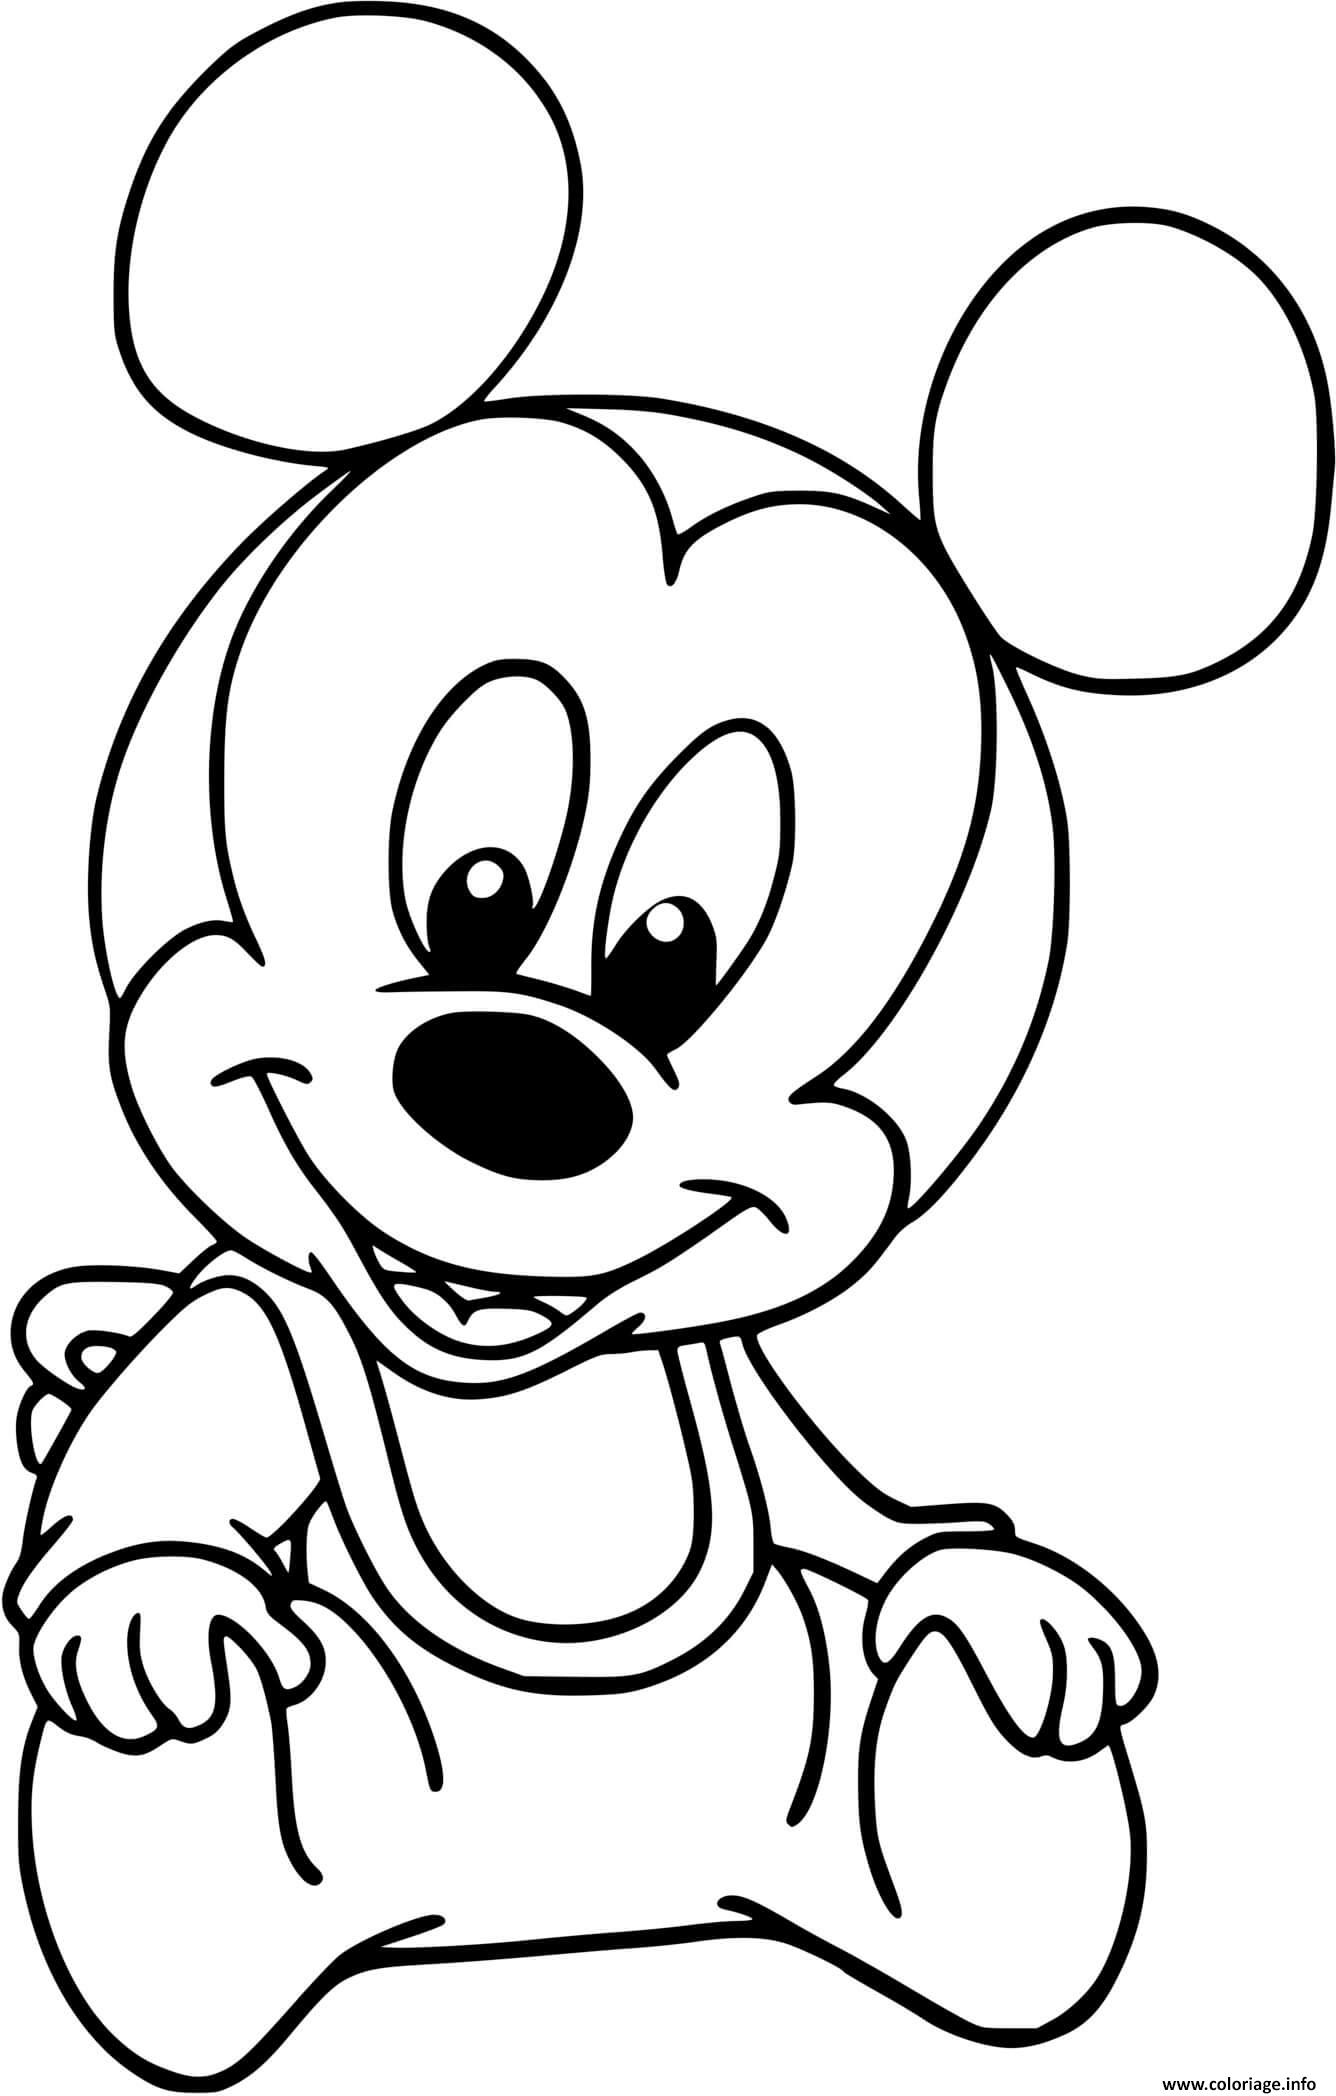 Coloriage Mickey Mouse Bebe Dessin à Imprimer